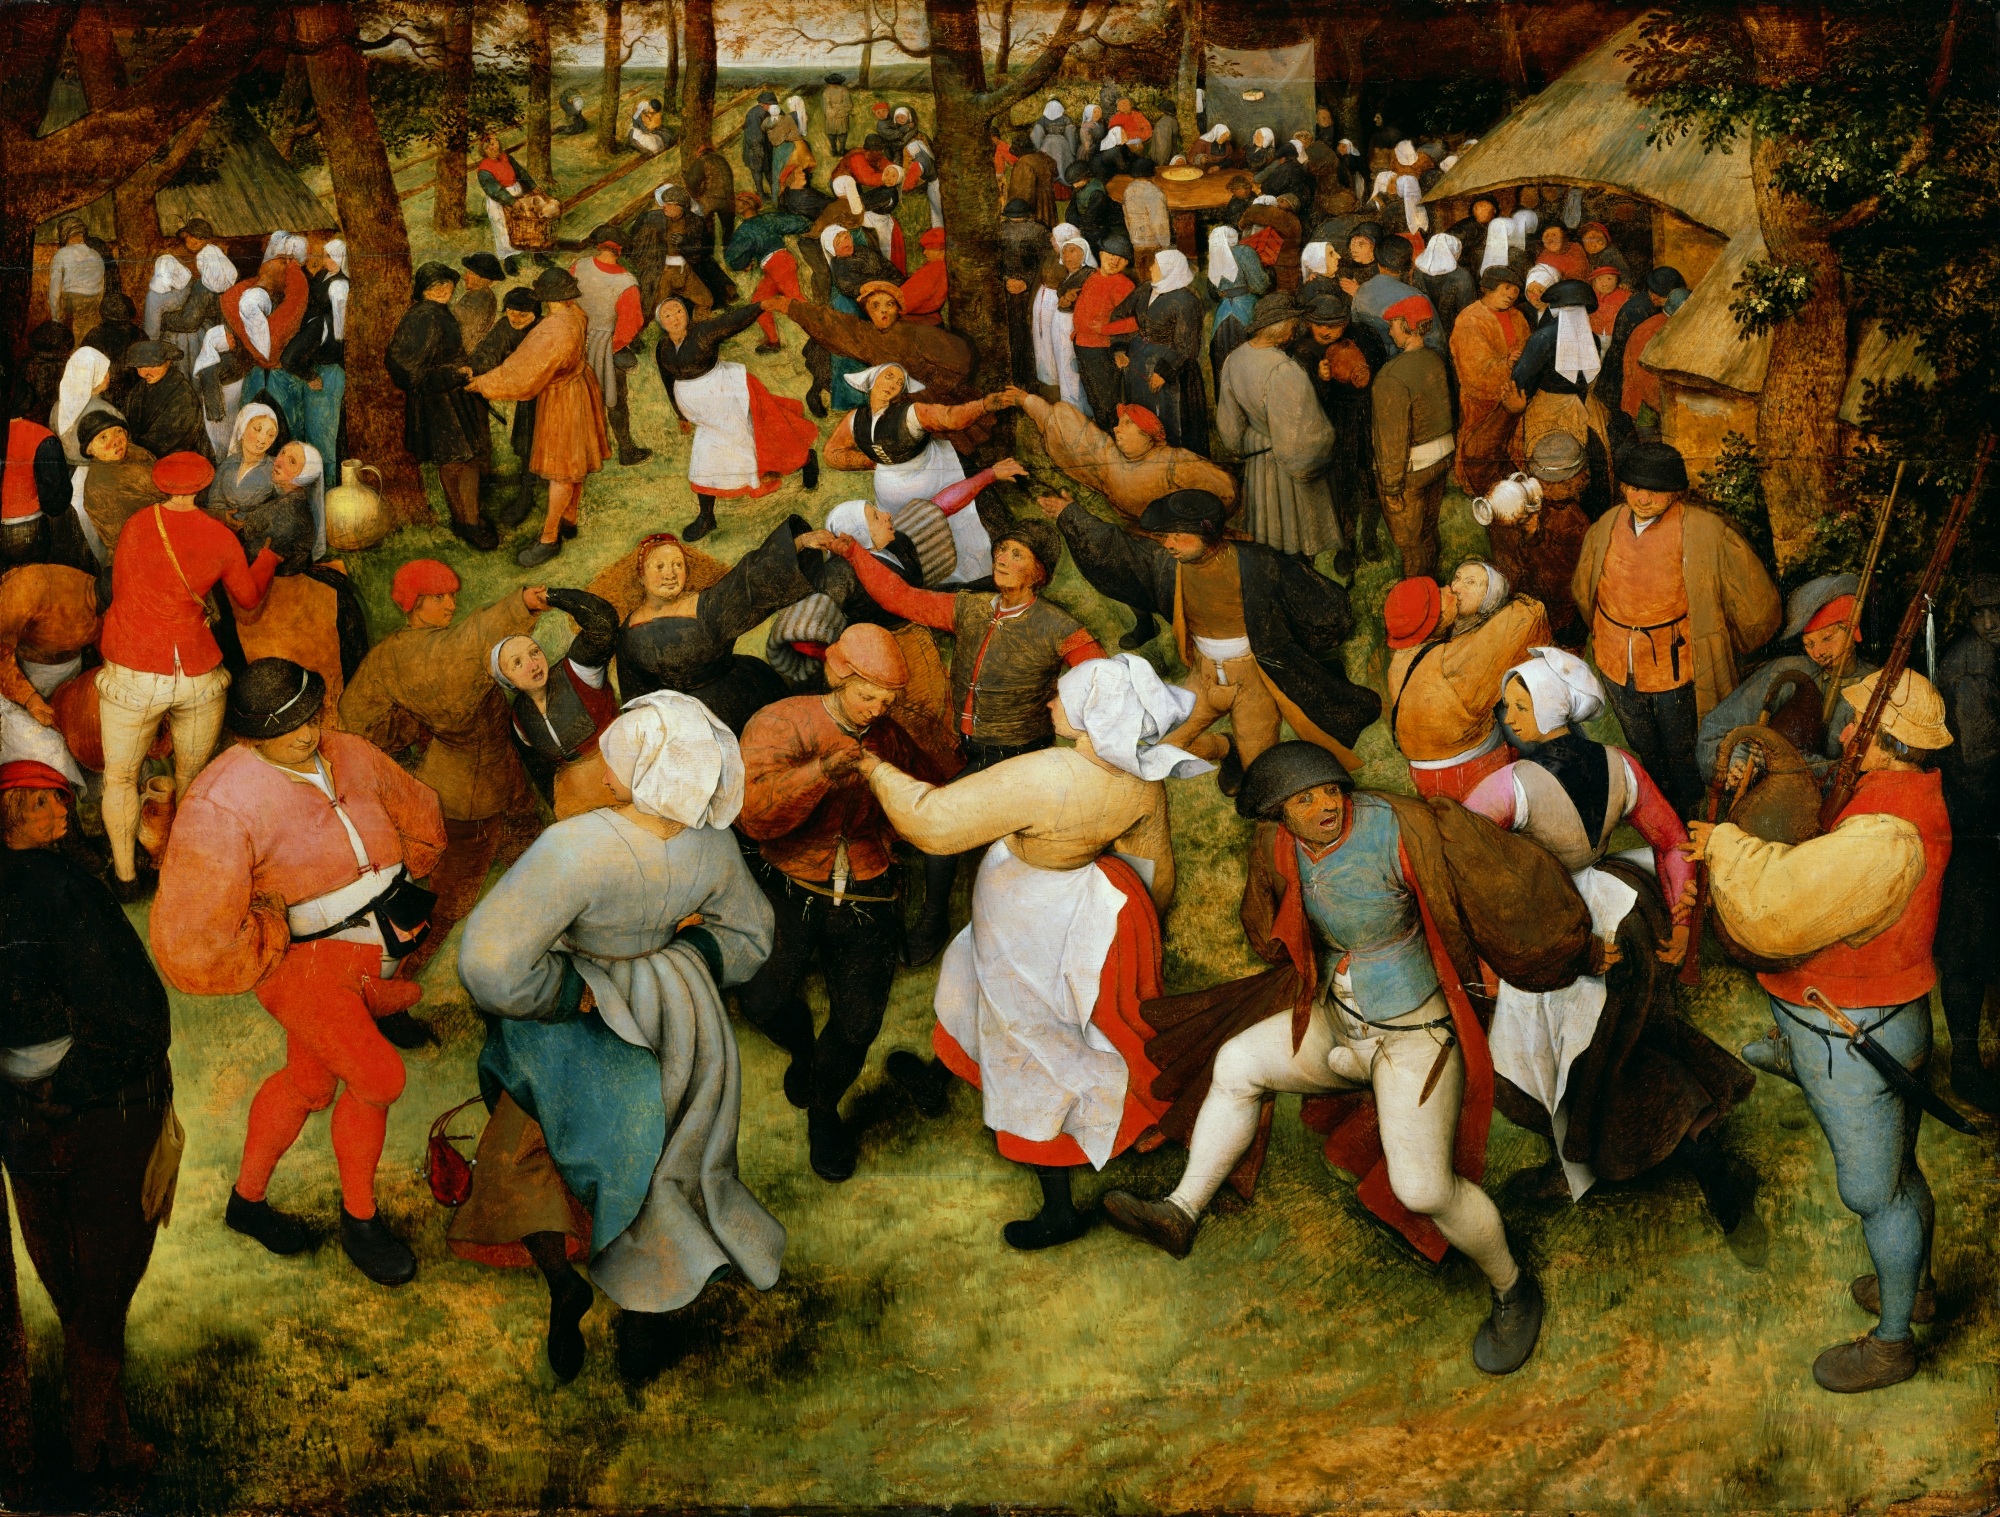 Весільні танці by Pieter Bruegel the Elder - 1566 - 119.4 см × 157.5 см 